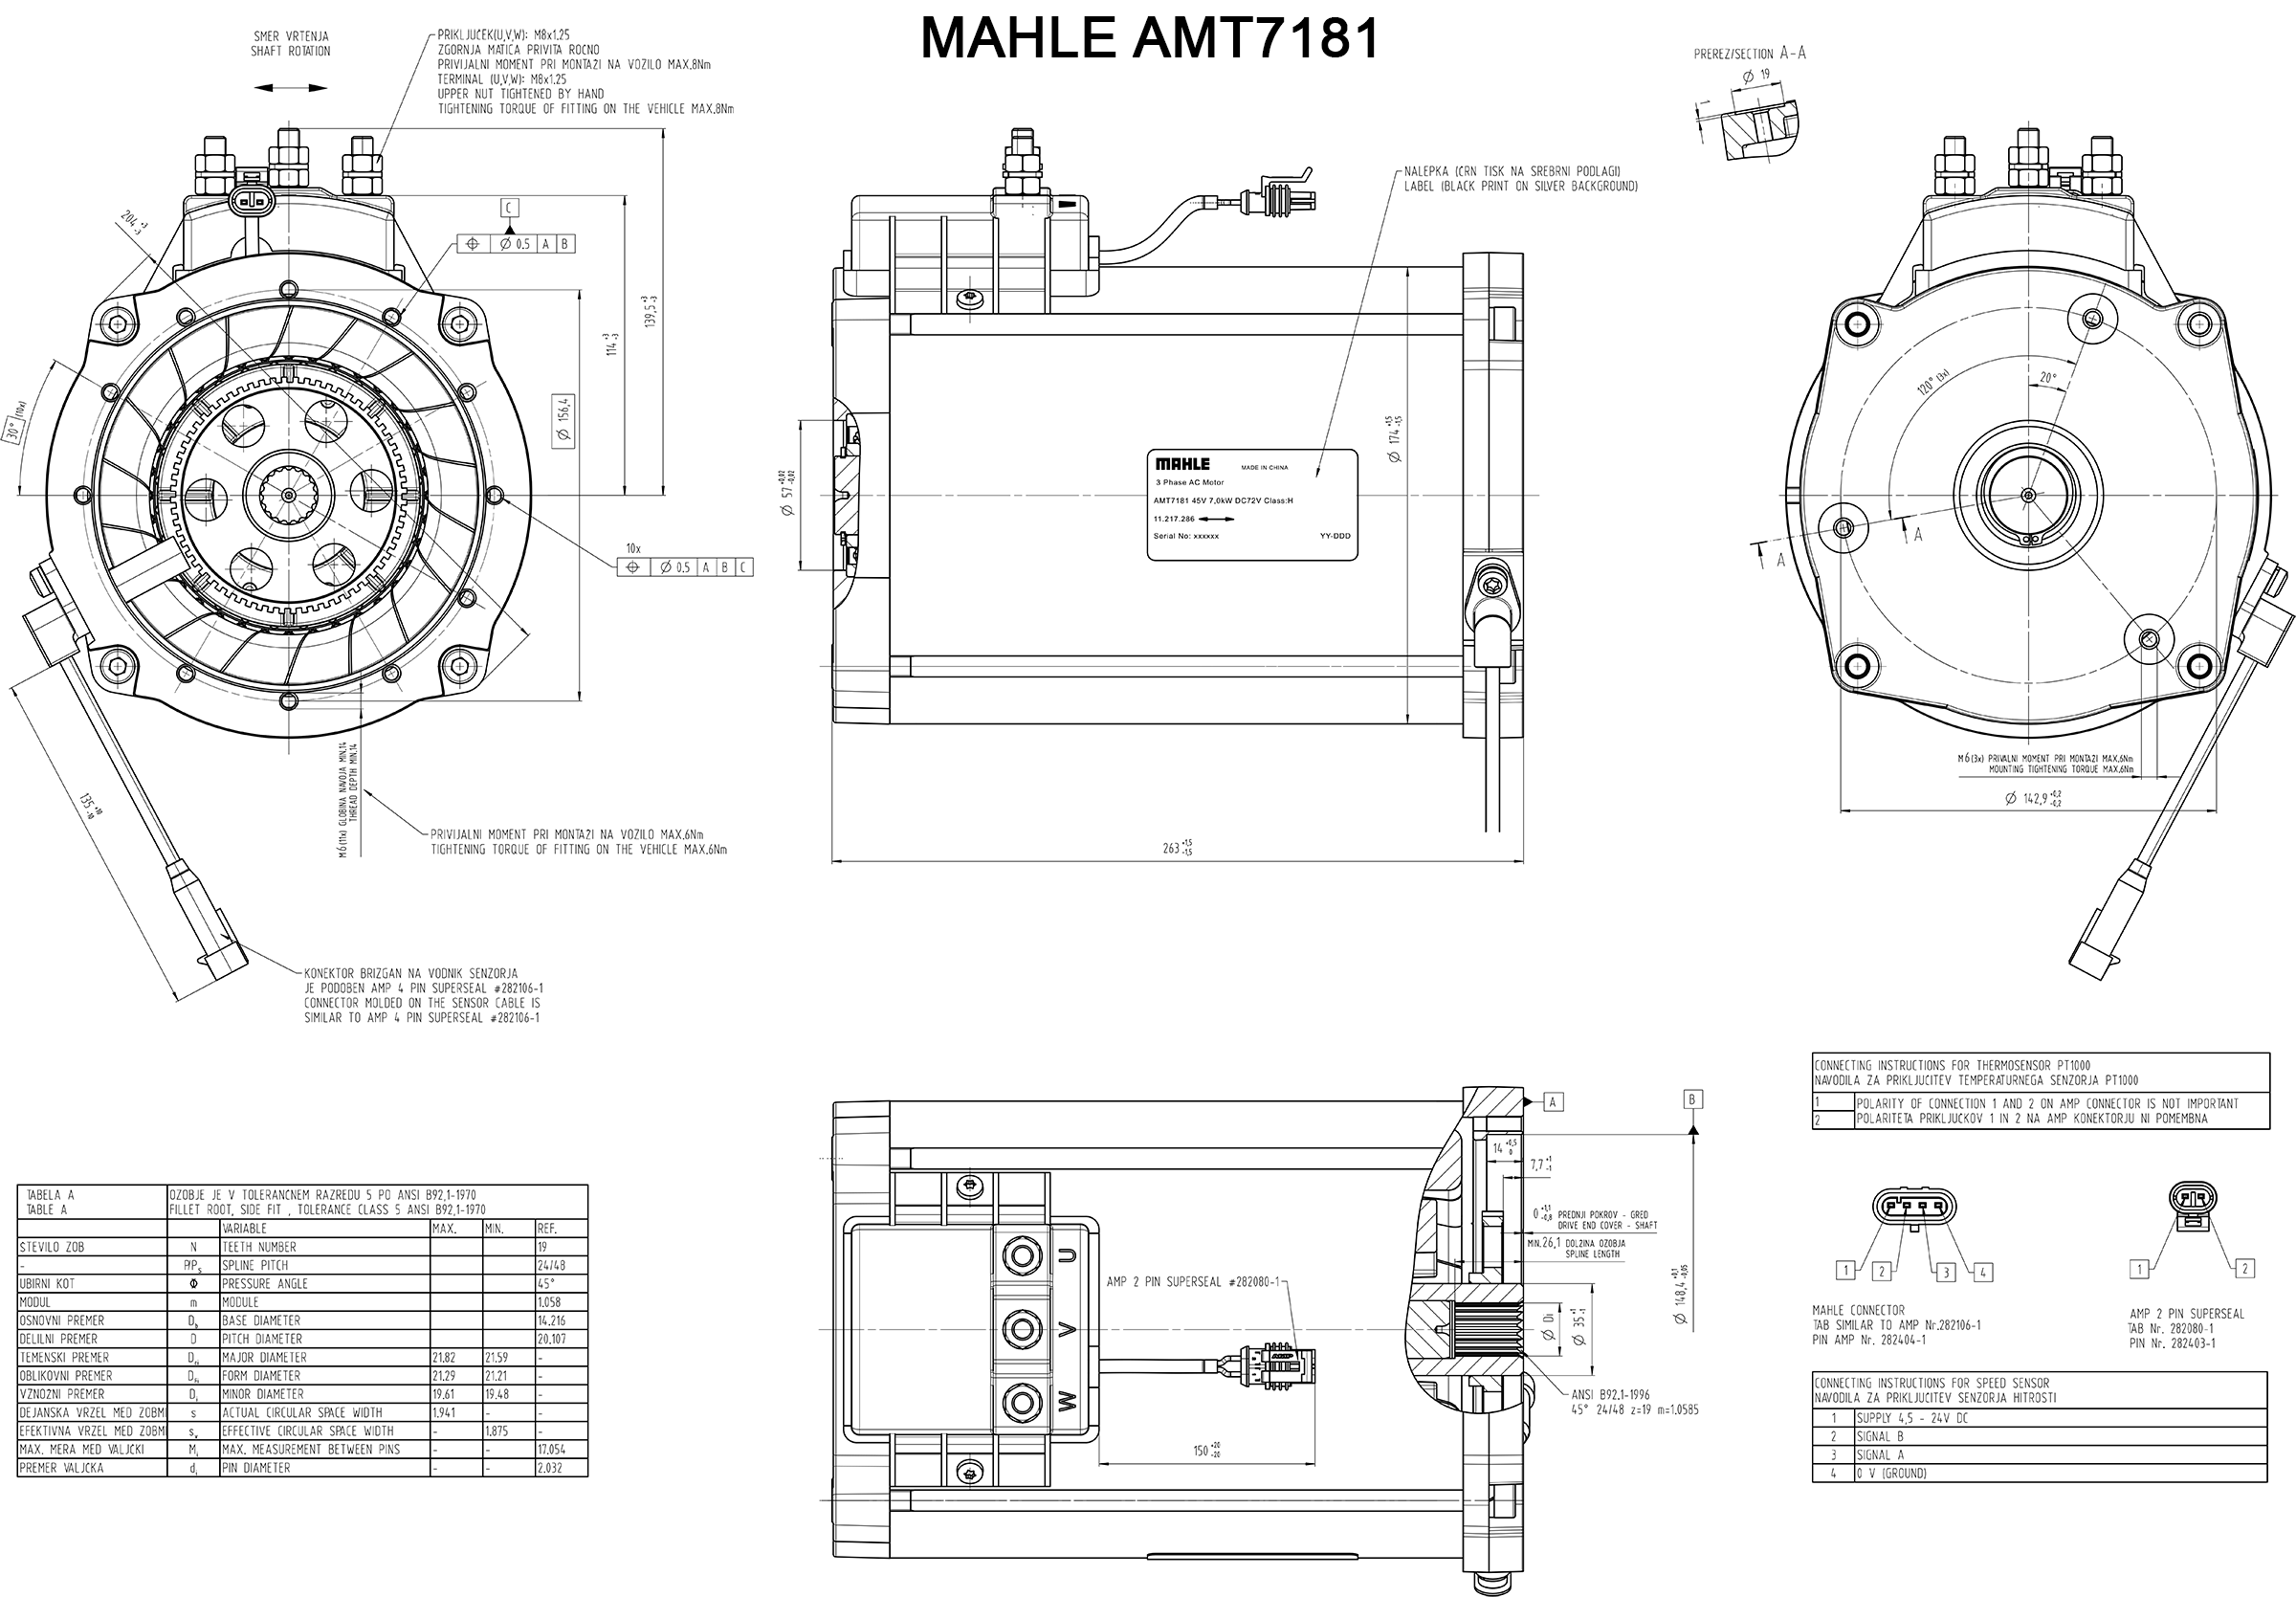 MAHLE Three Phase AC Motor AMT7181, Outline Diagram